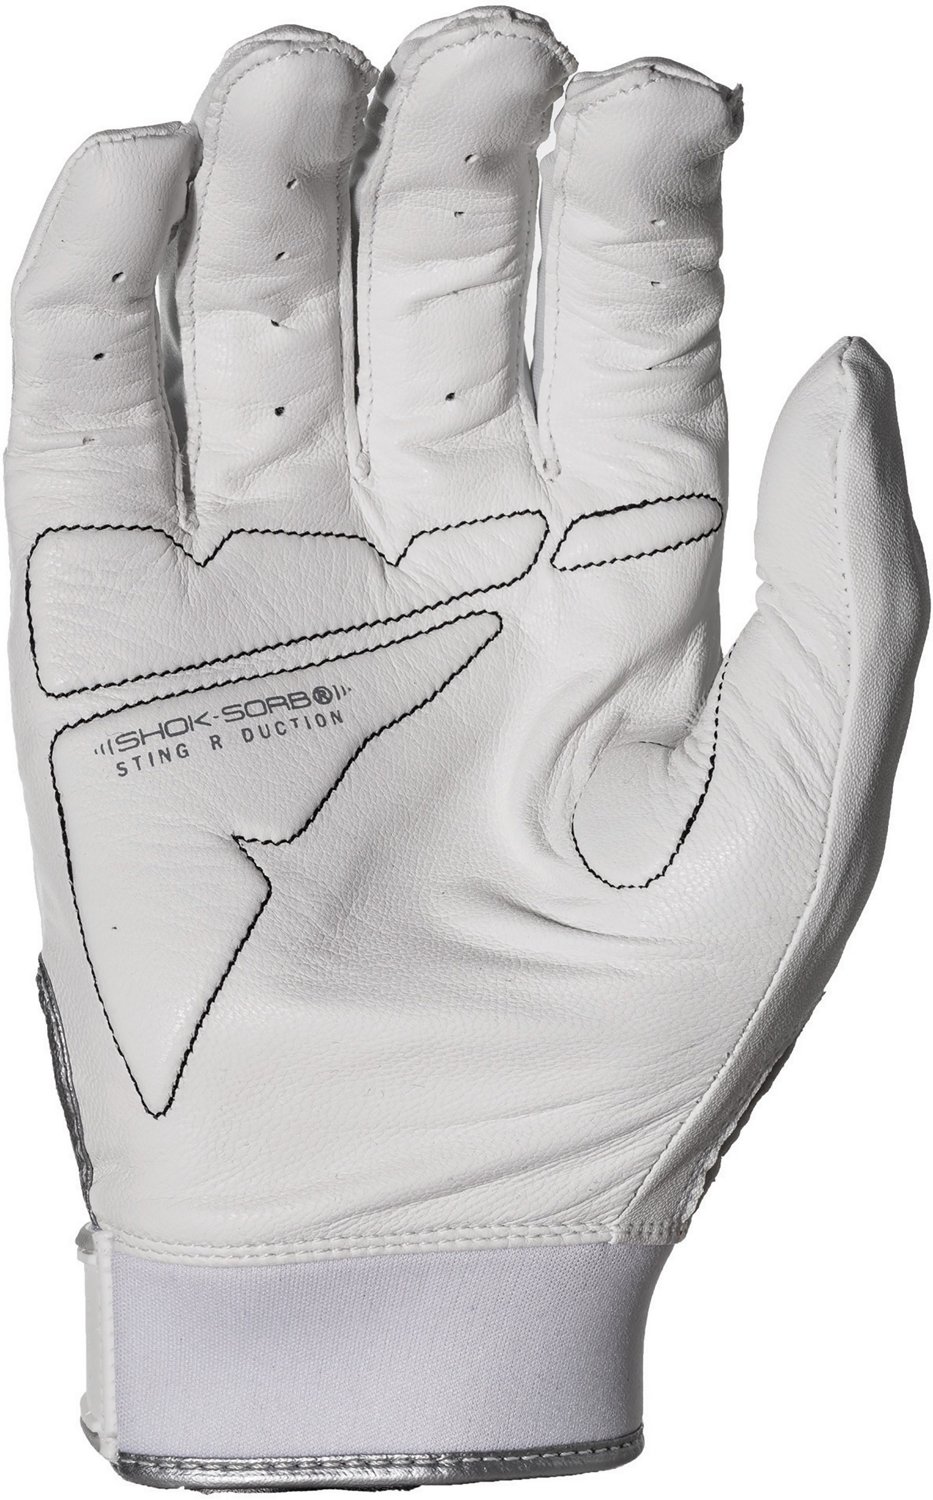 Franklin Men's SHOK-SORB X Batting Gloves | Academy